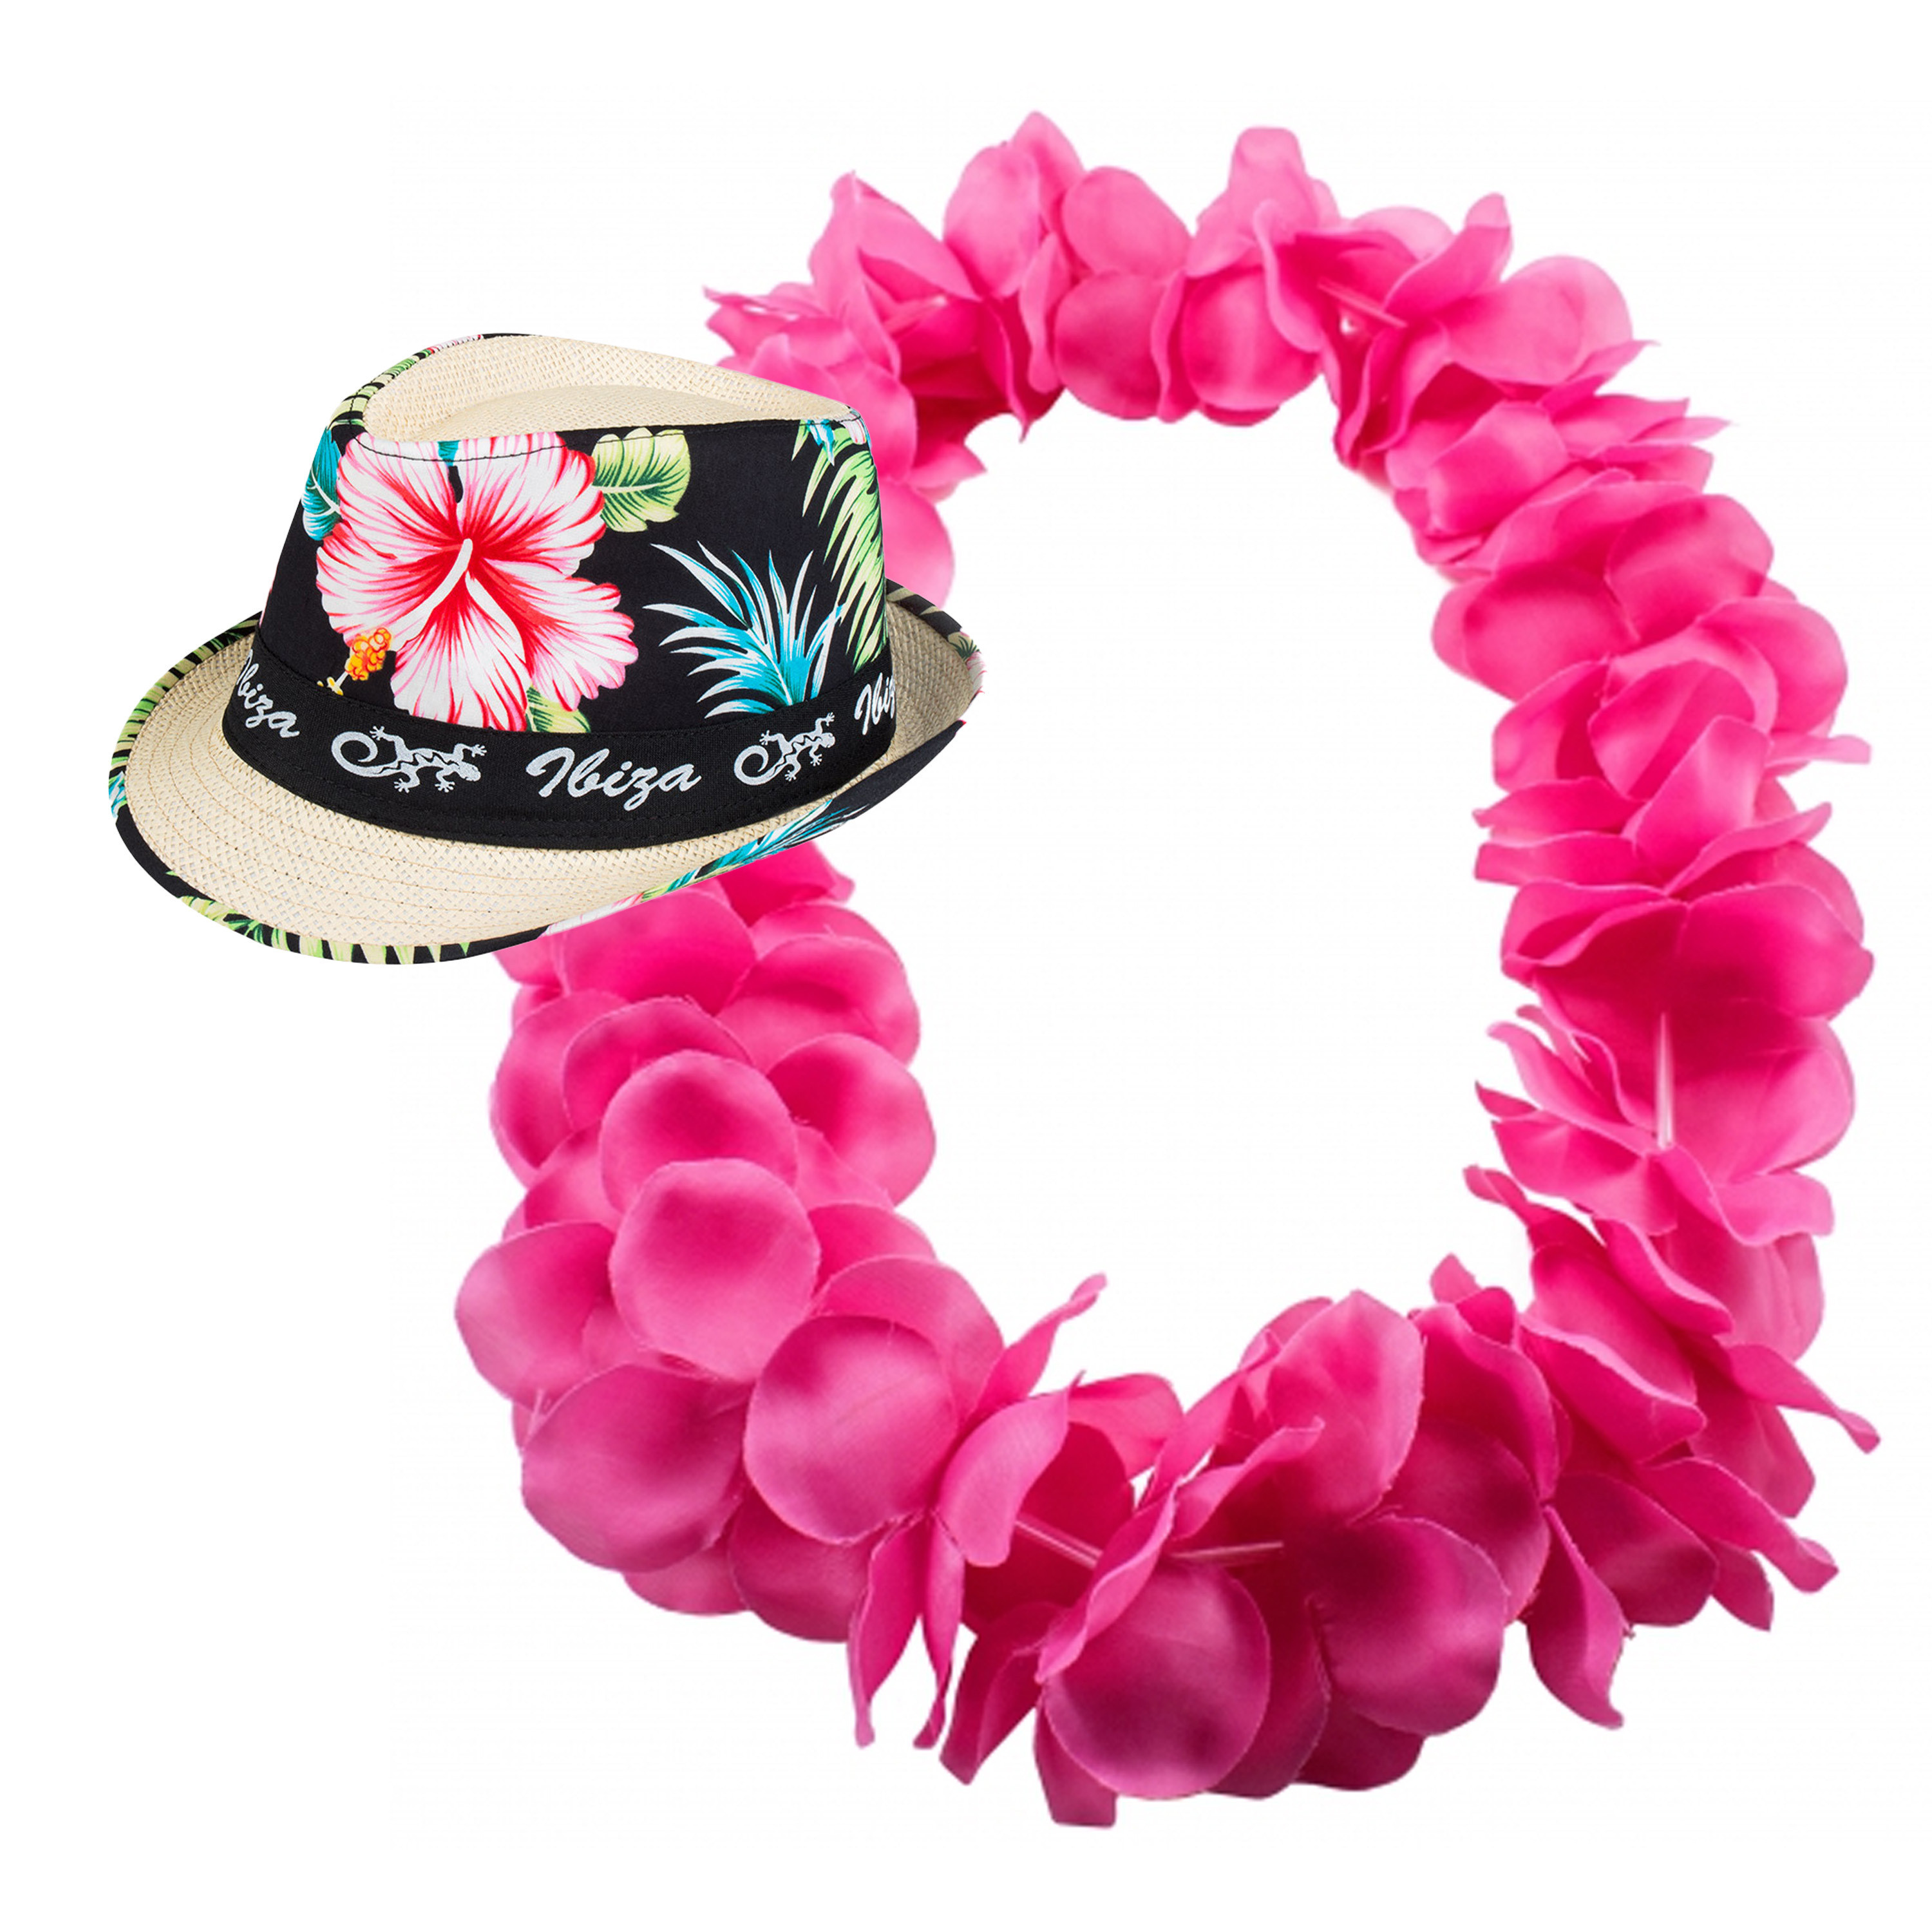 Hawaii thema party verkleedset - Trilby strohoedje - bloemenkrans knalroze - Tropical toppers